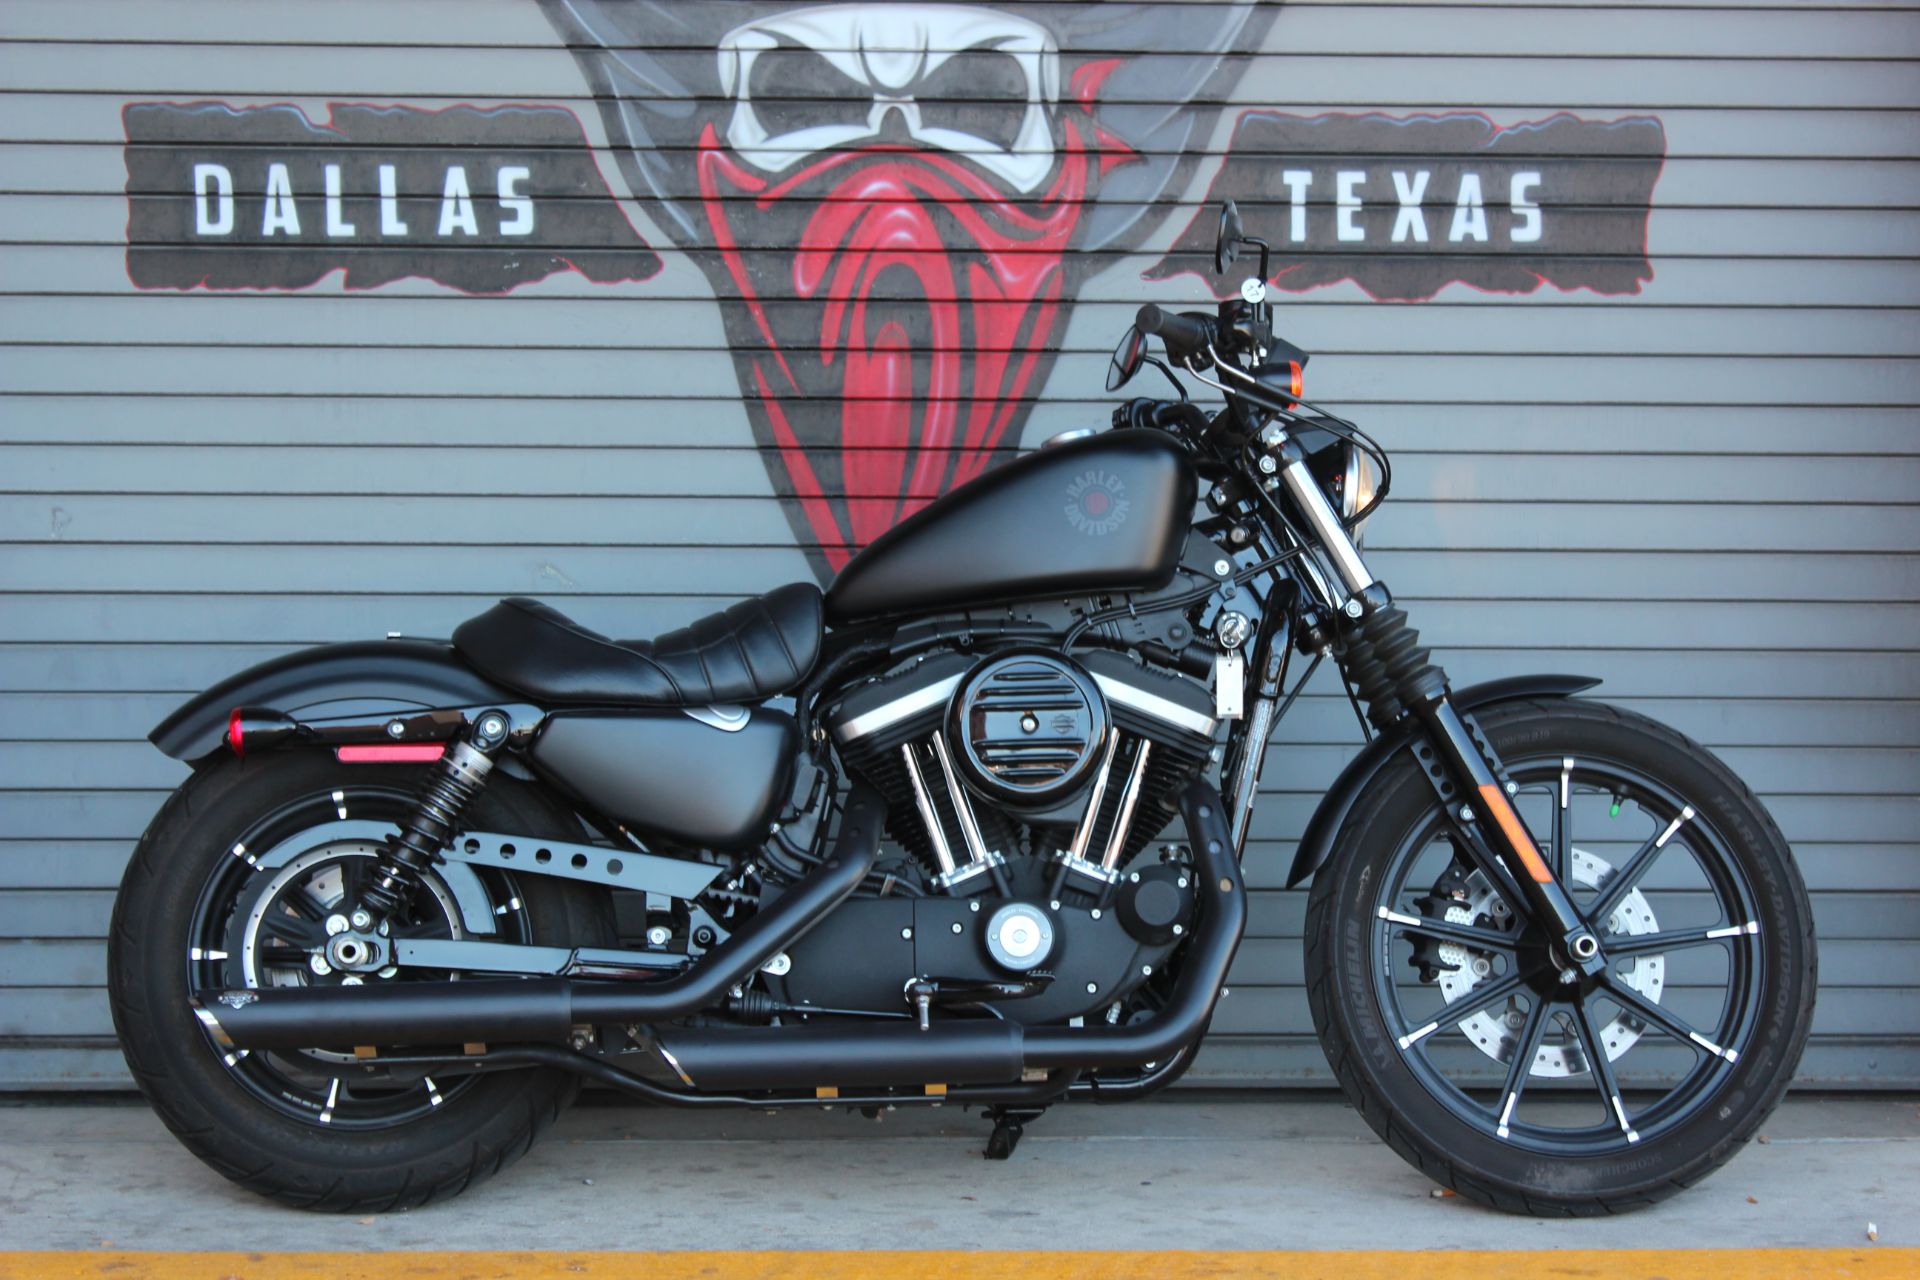 2020 Harley-Davidson Iron 883™ in Carrollton, Texas - Photo 3